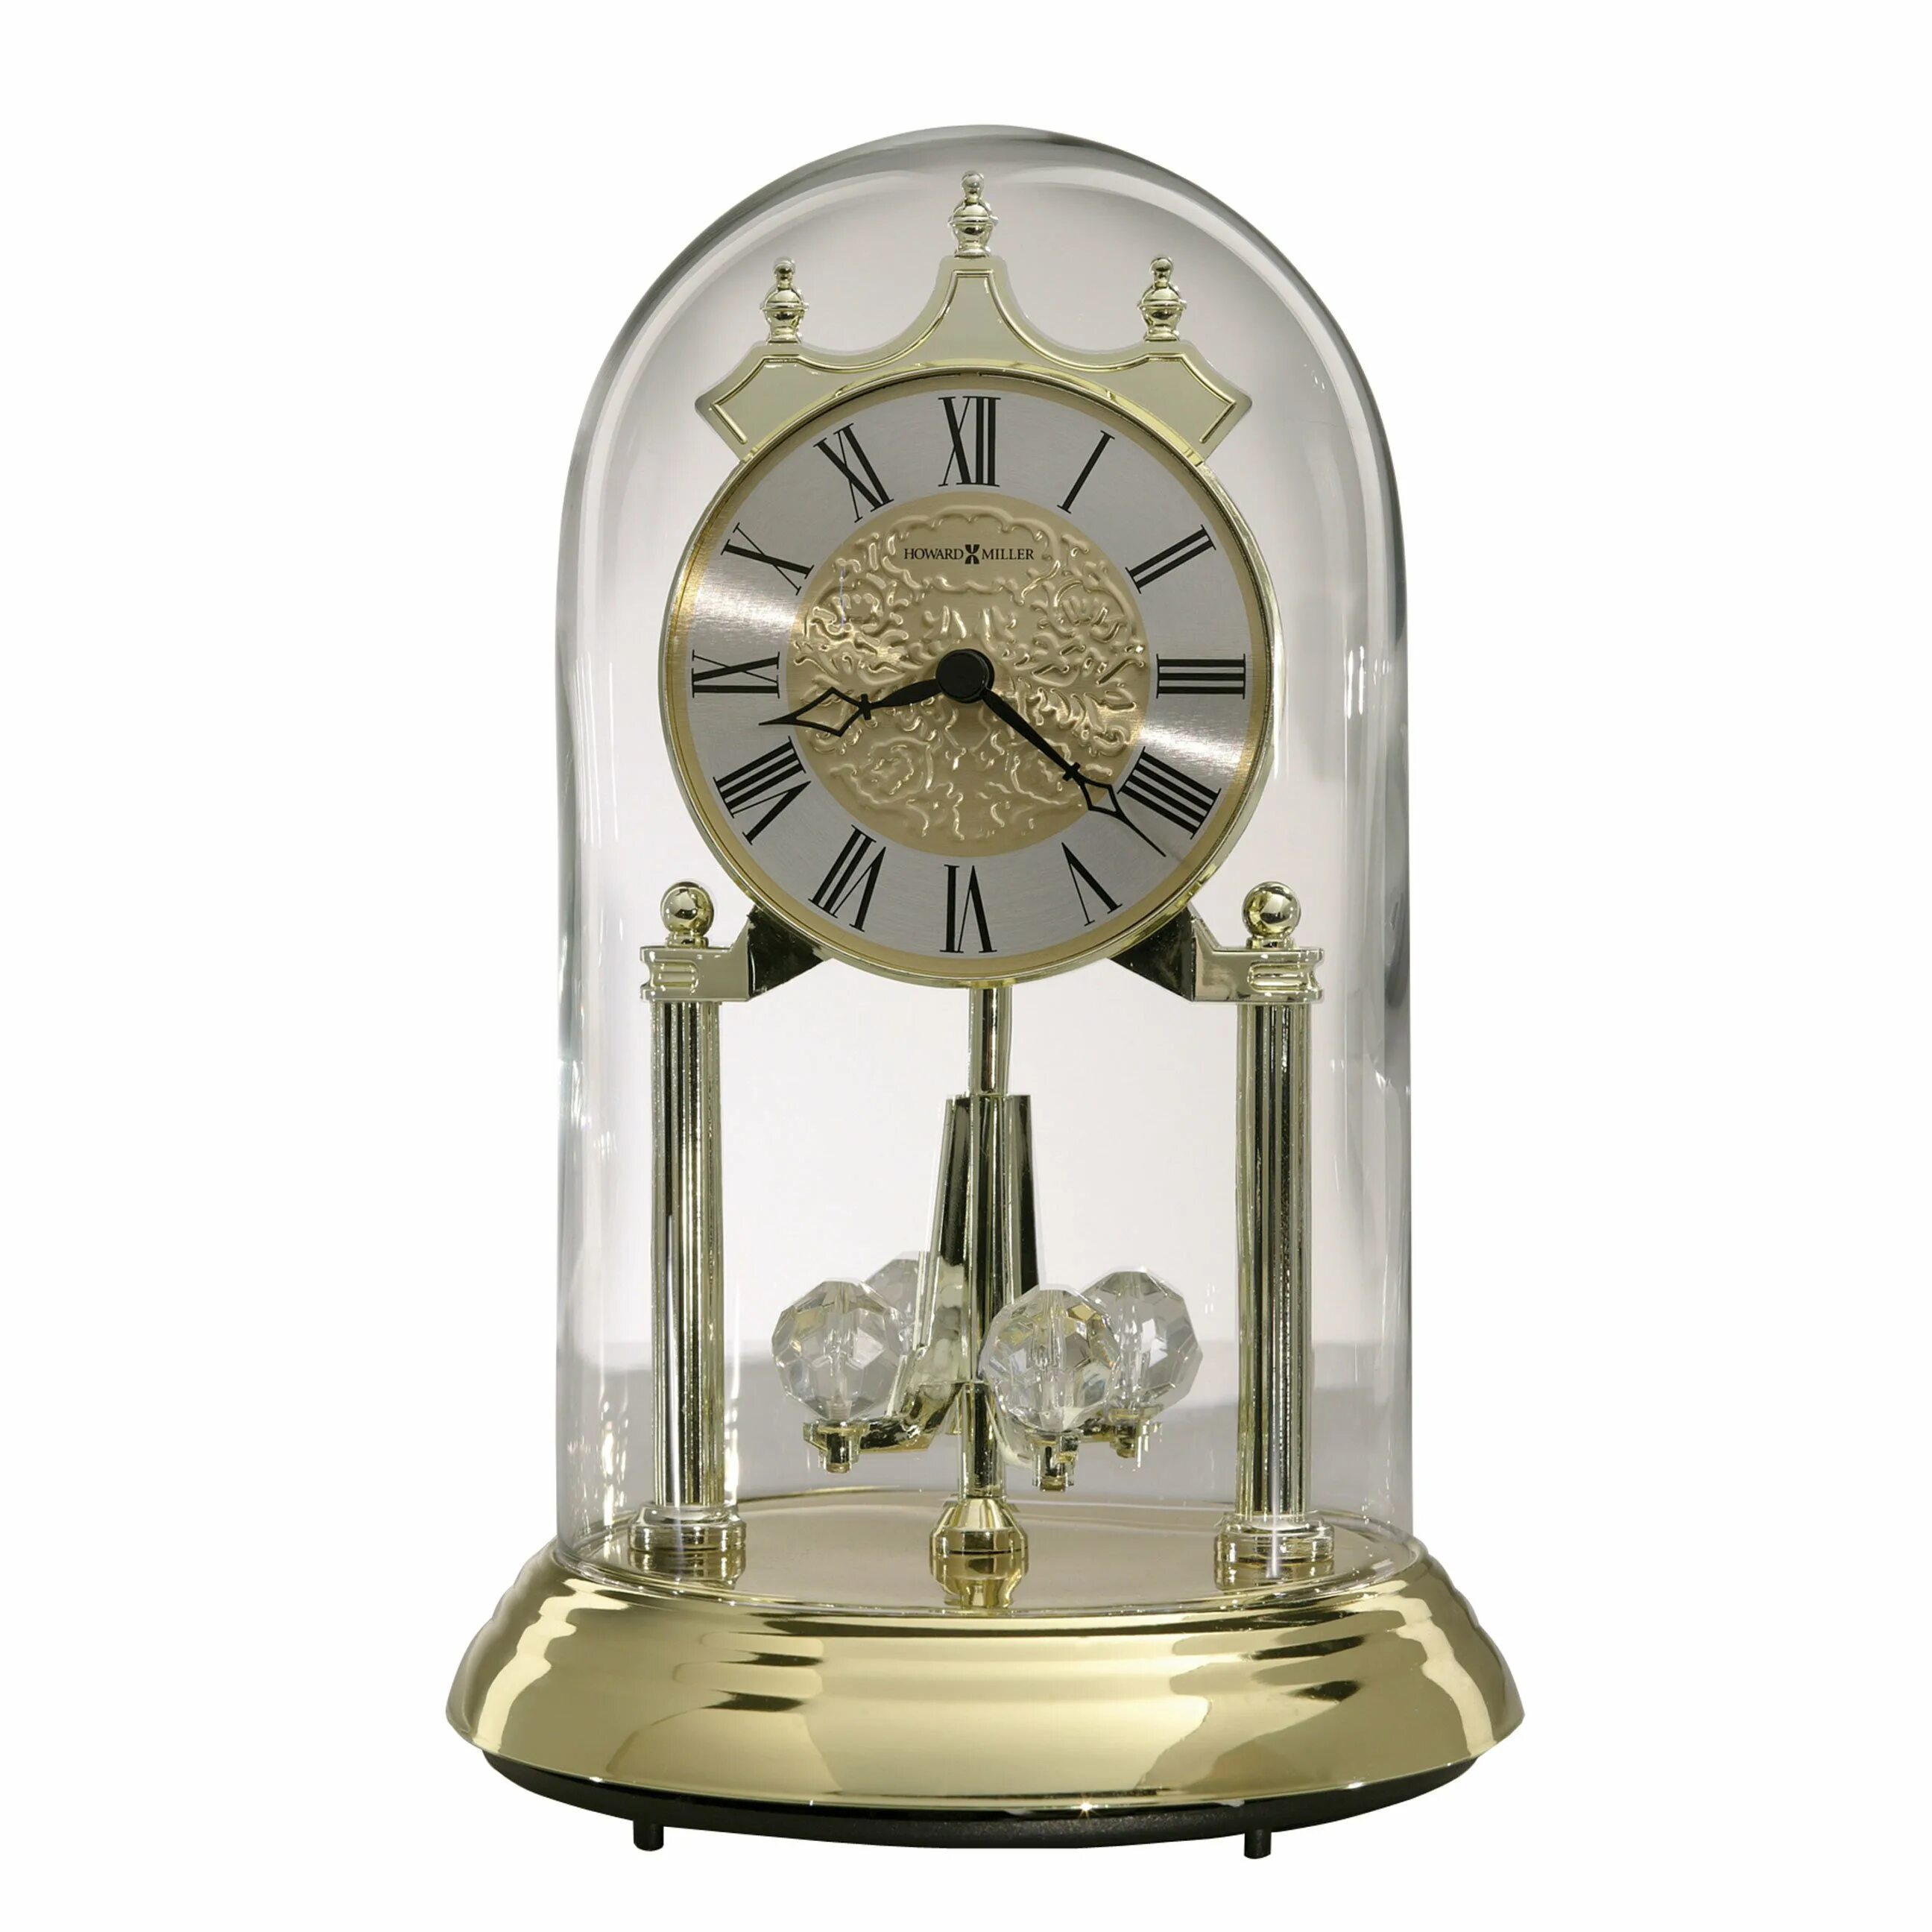 Настольные часы Hermle Quartz. Часы Howard Miller с маятником. Часы Ховард Миллер настольные. Howard Miller настольные часы 635-107 Burton II.